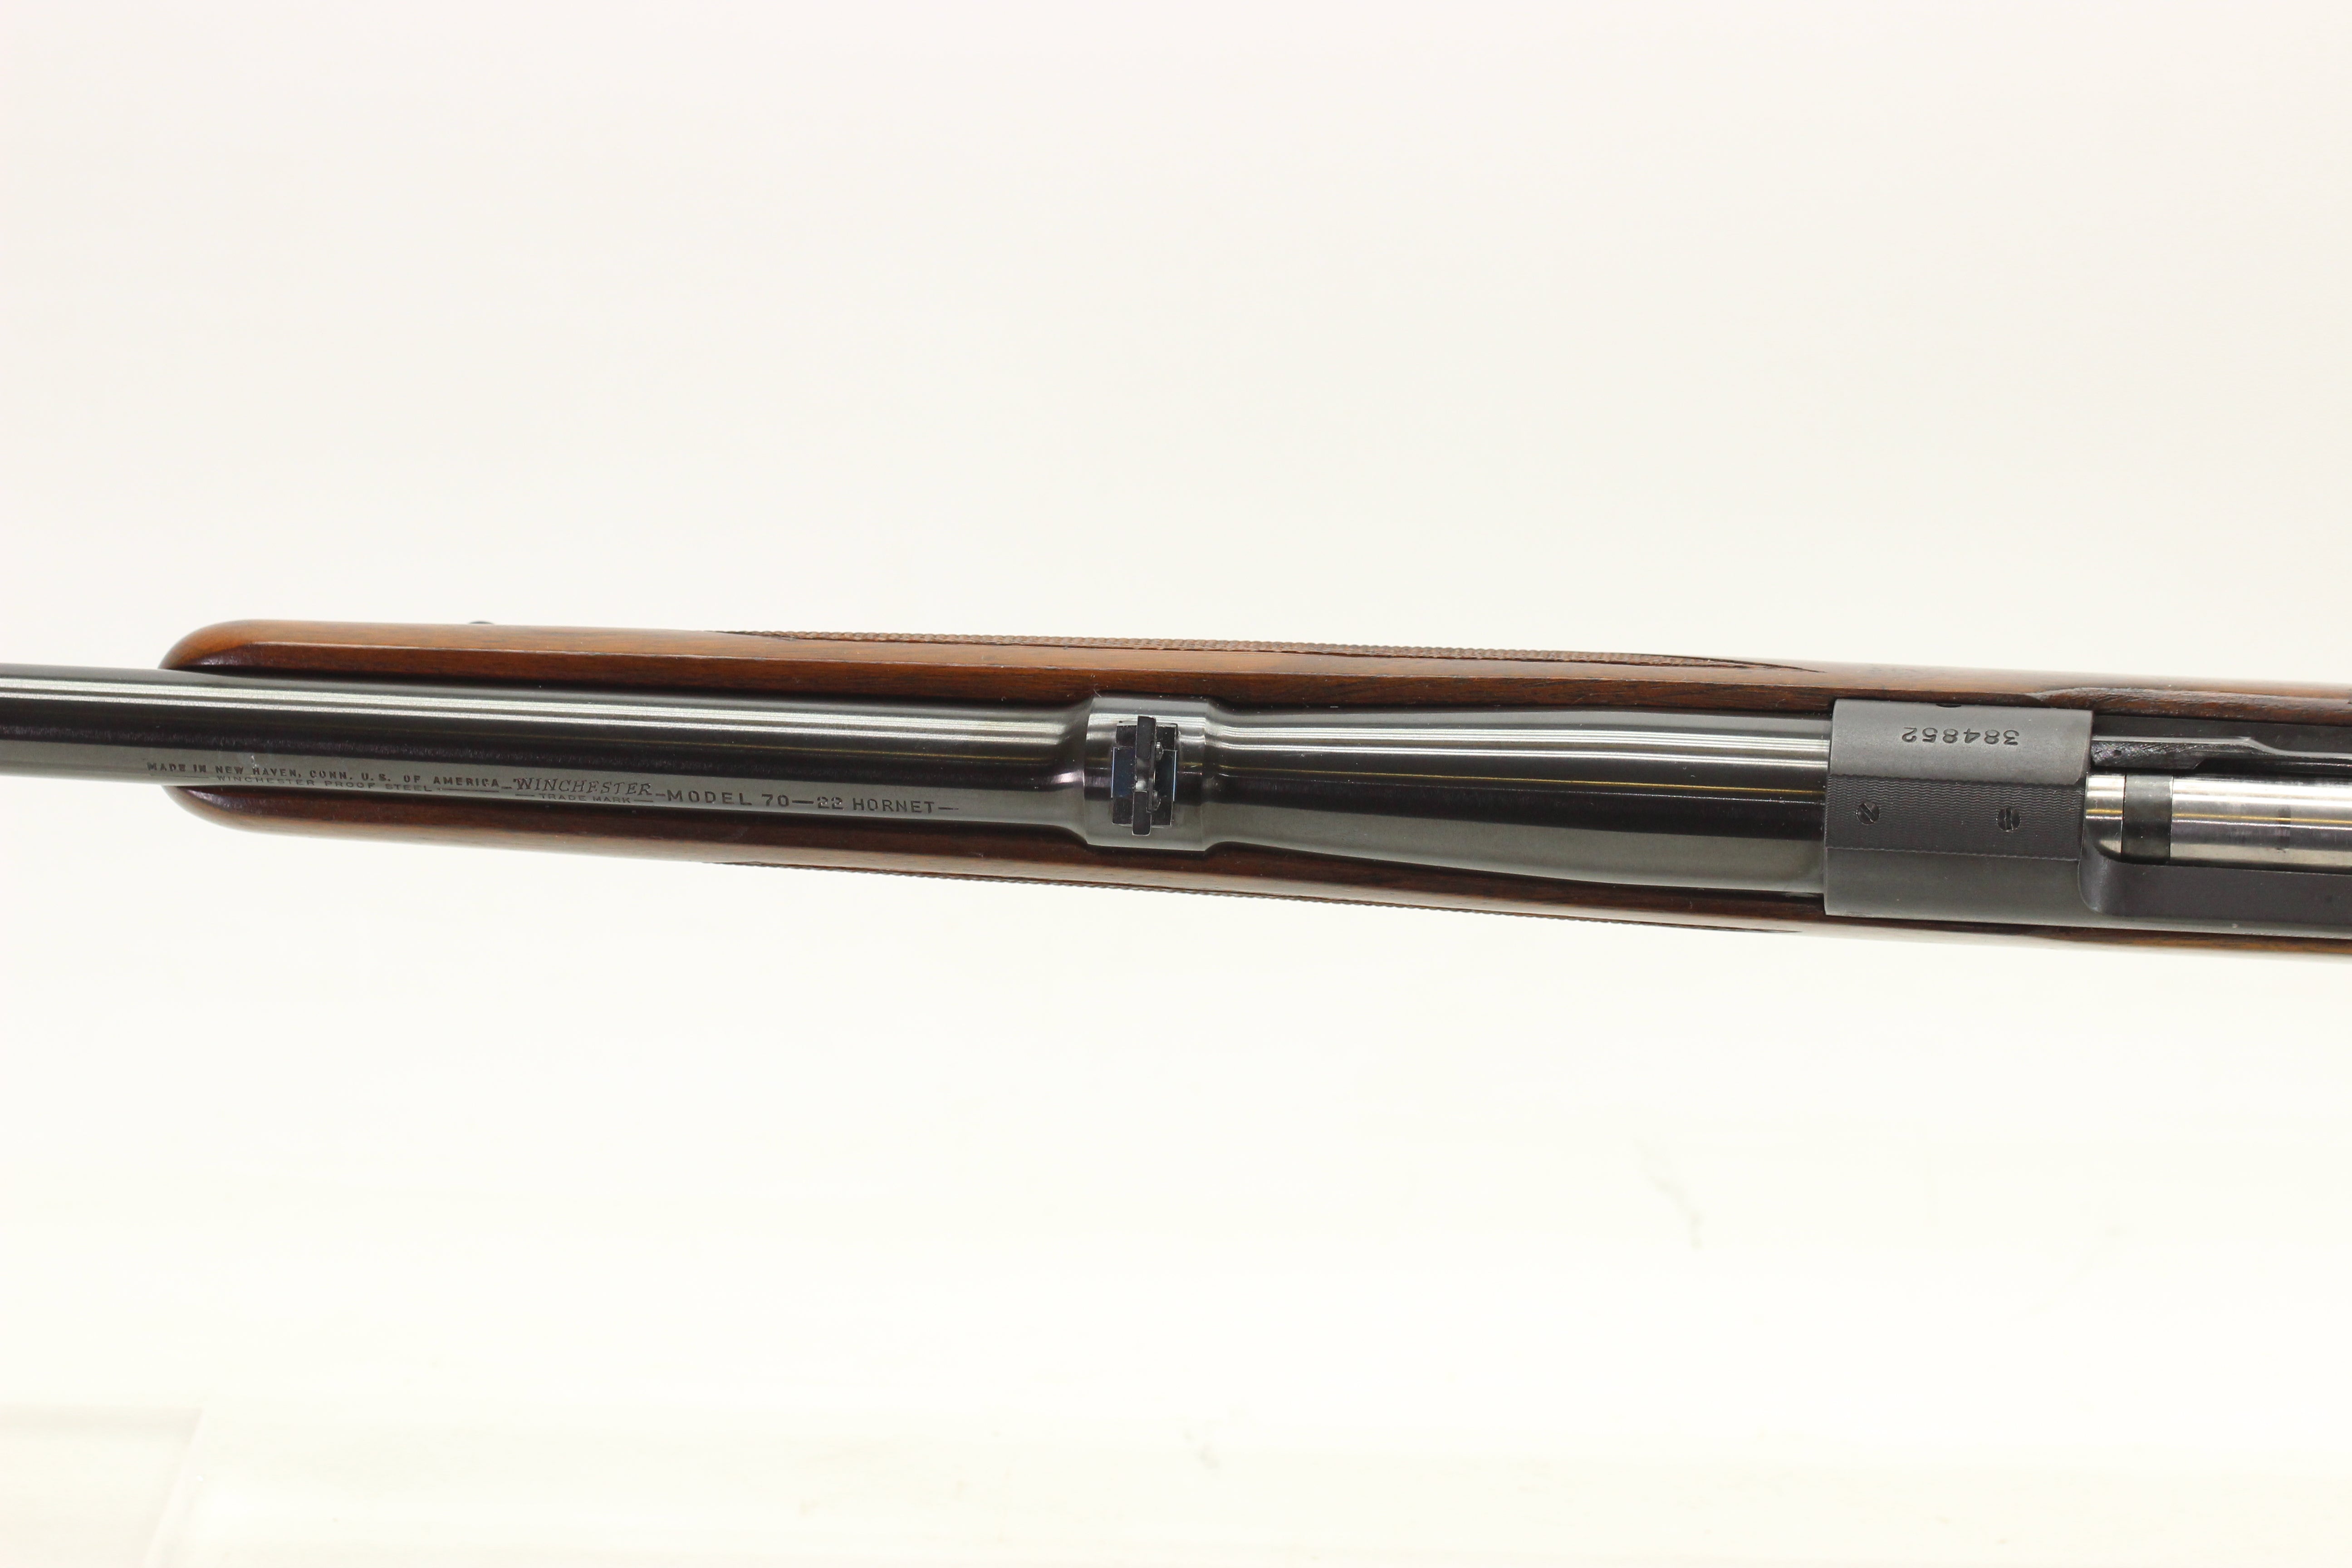 .22 Hornet Standard Rifle - 1956